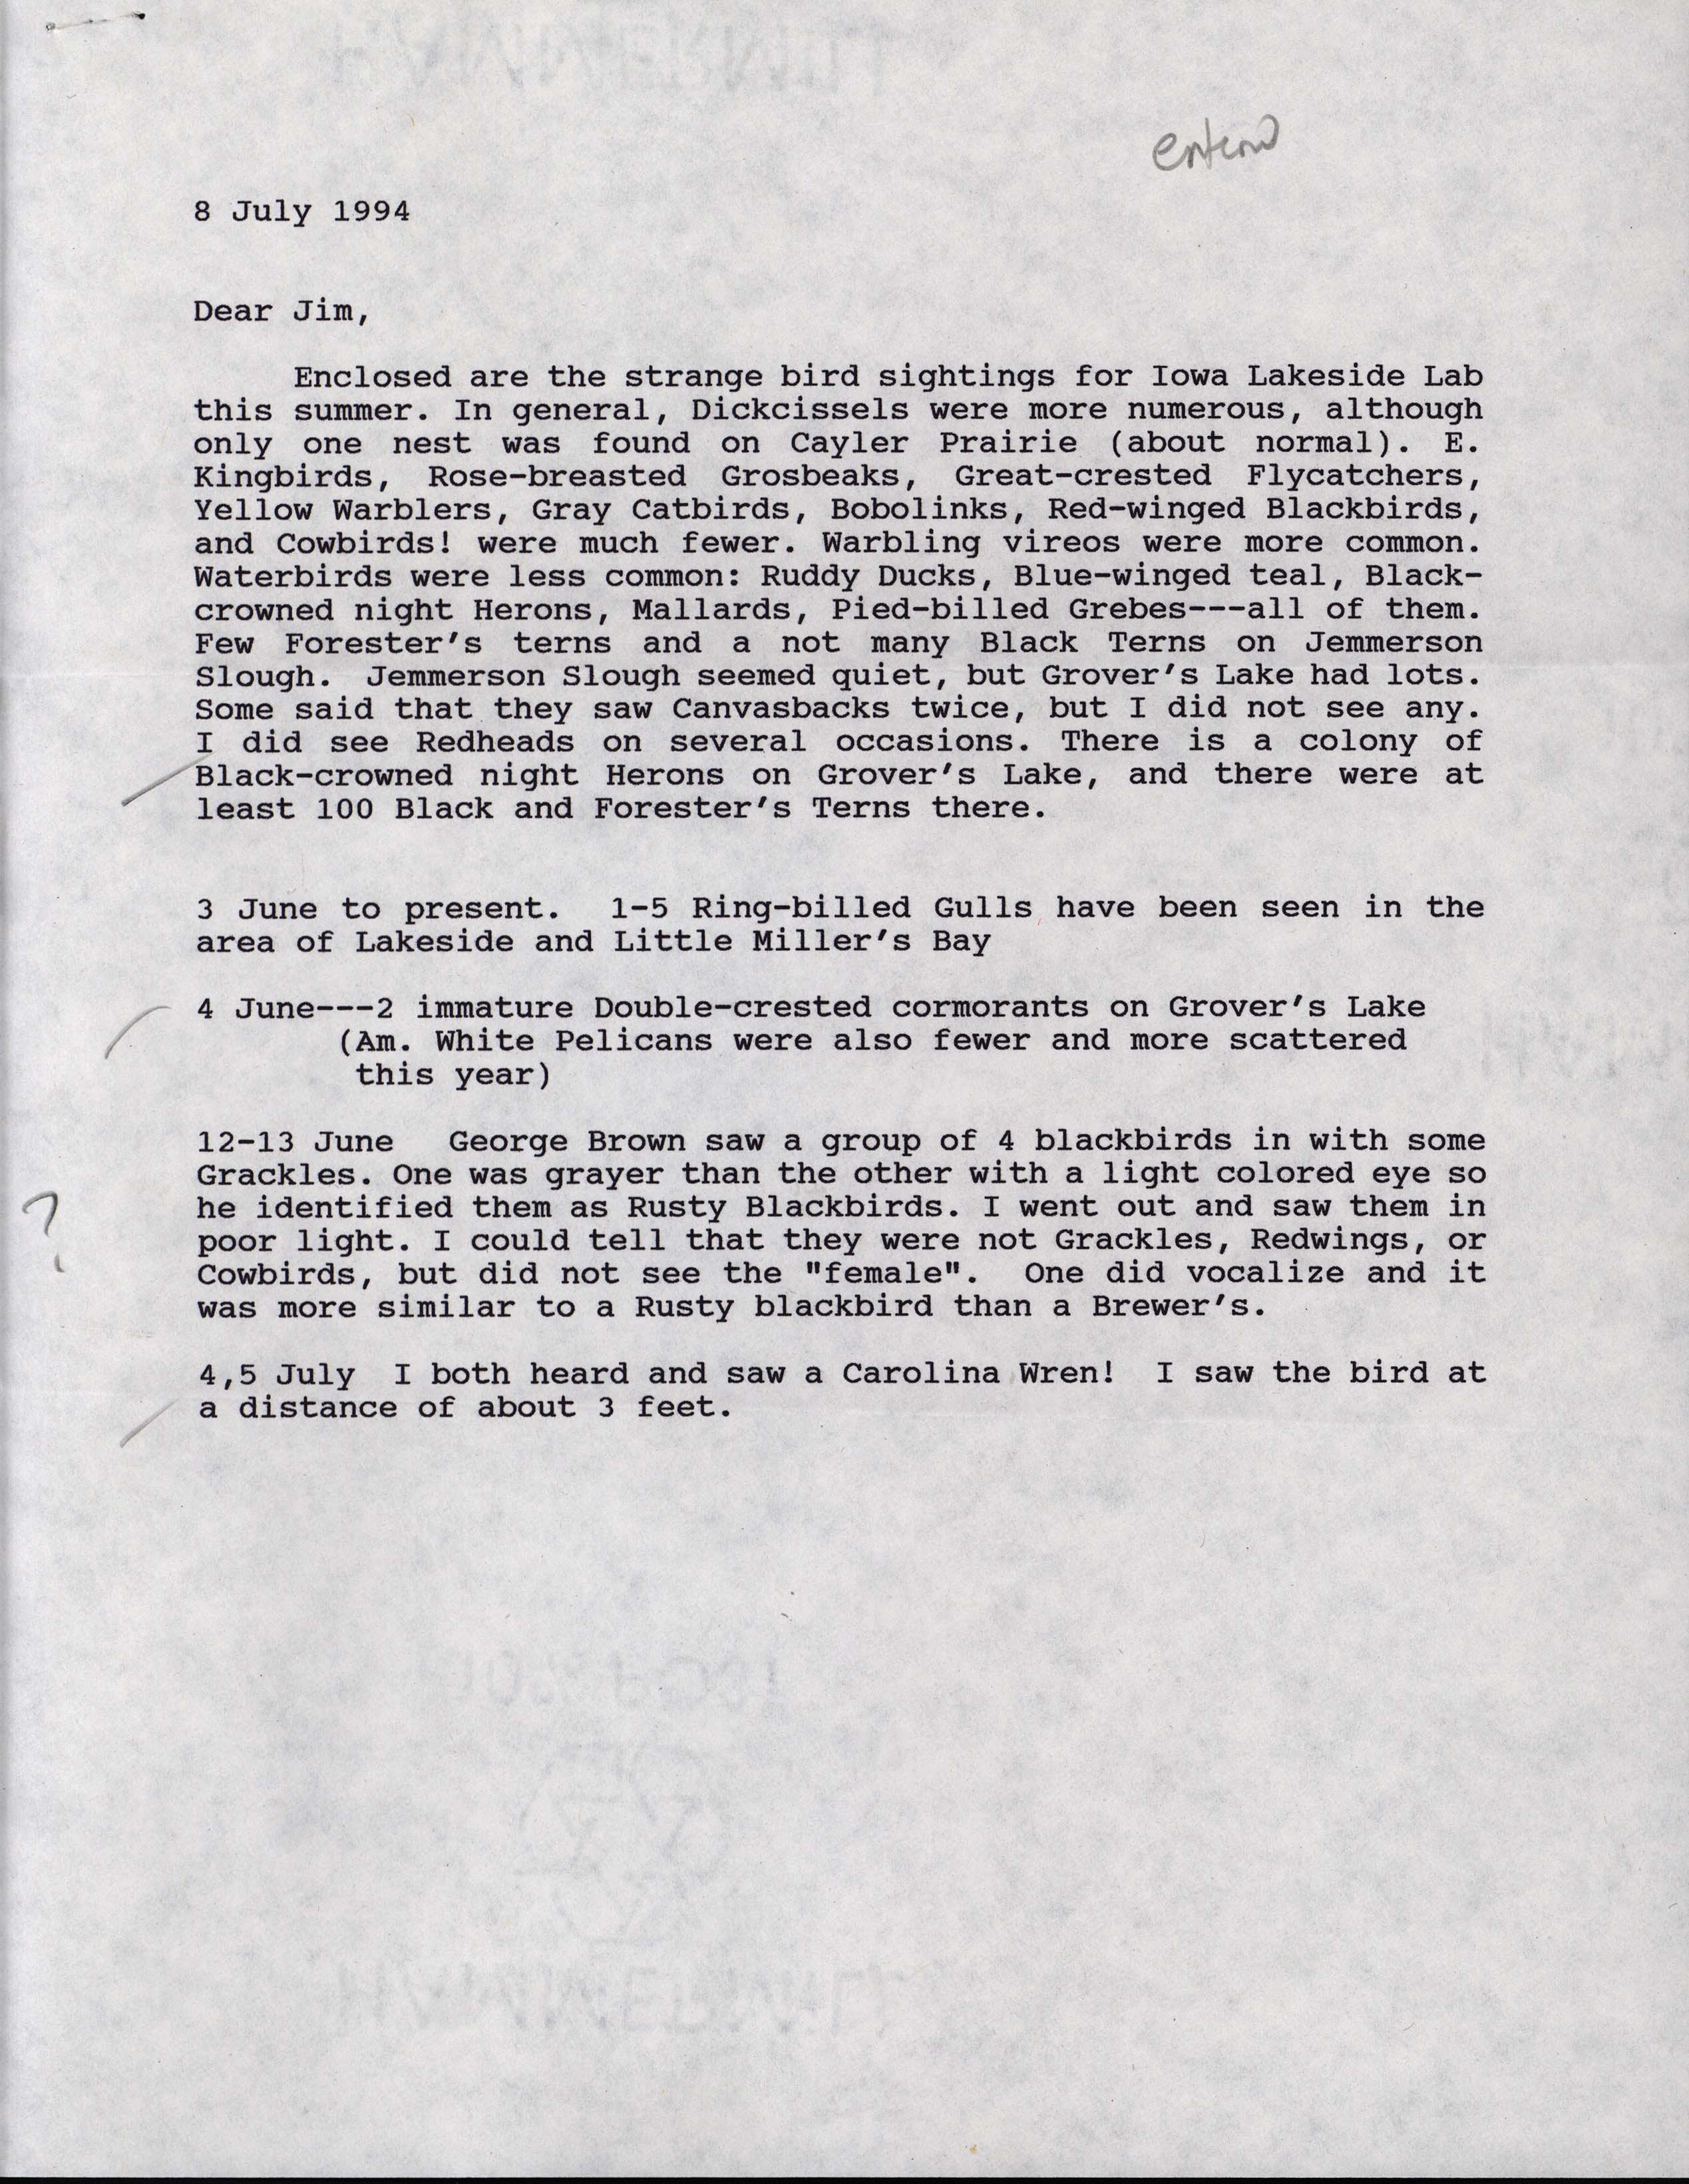 Neil Bernstein letter to Jim Dinsmore regarding summer sightings, July 8, 1994